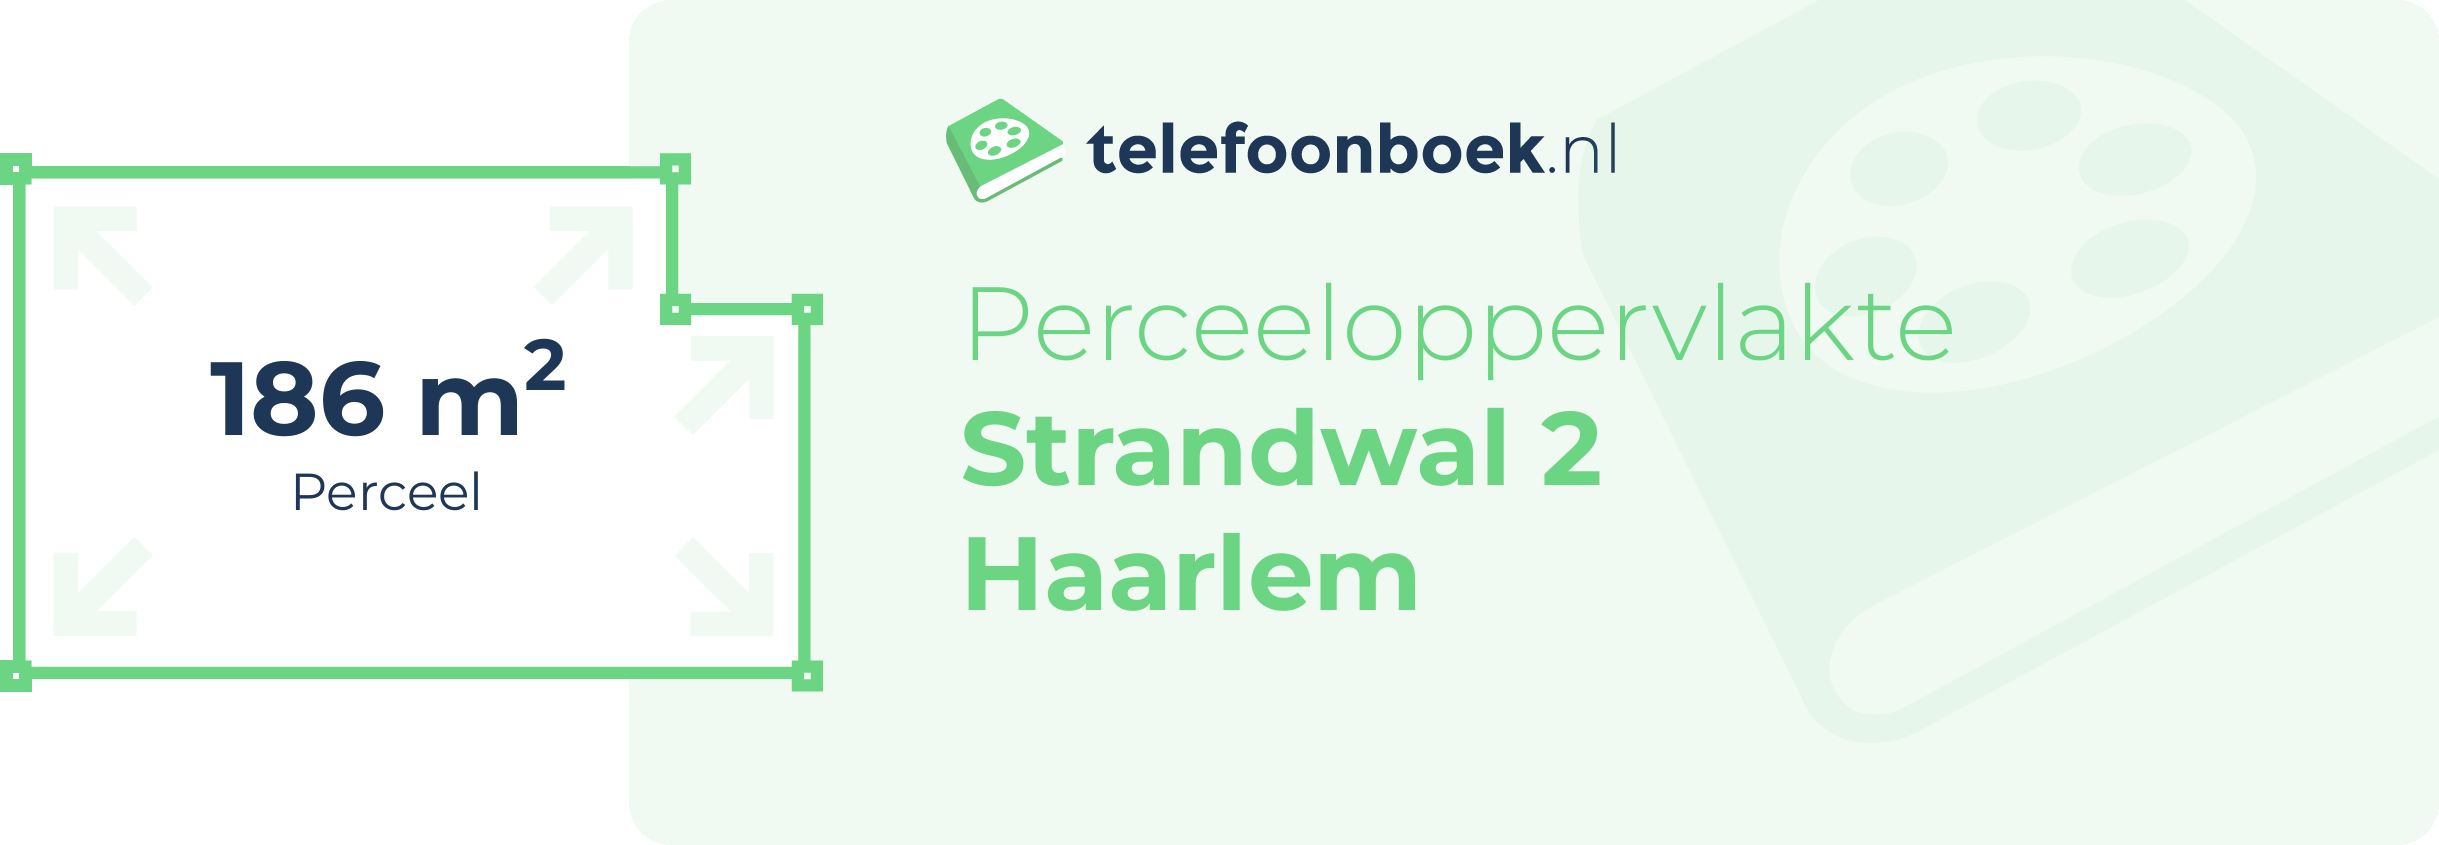 Perceeloppervlakte Strandwal 2 Haarlem